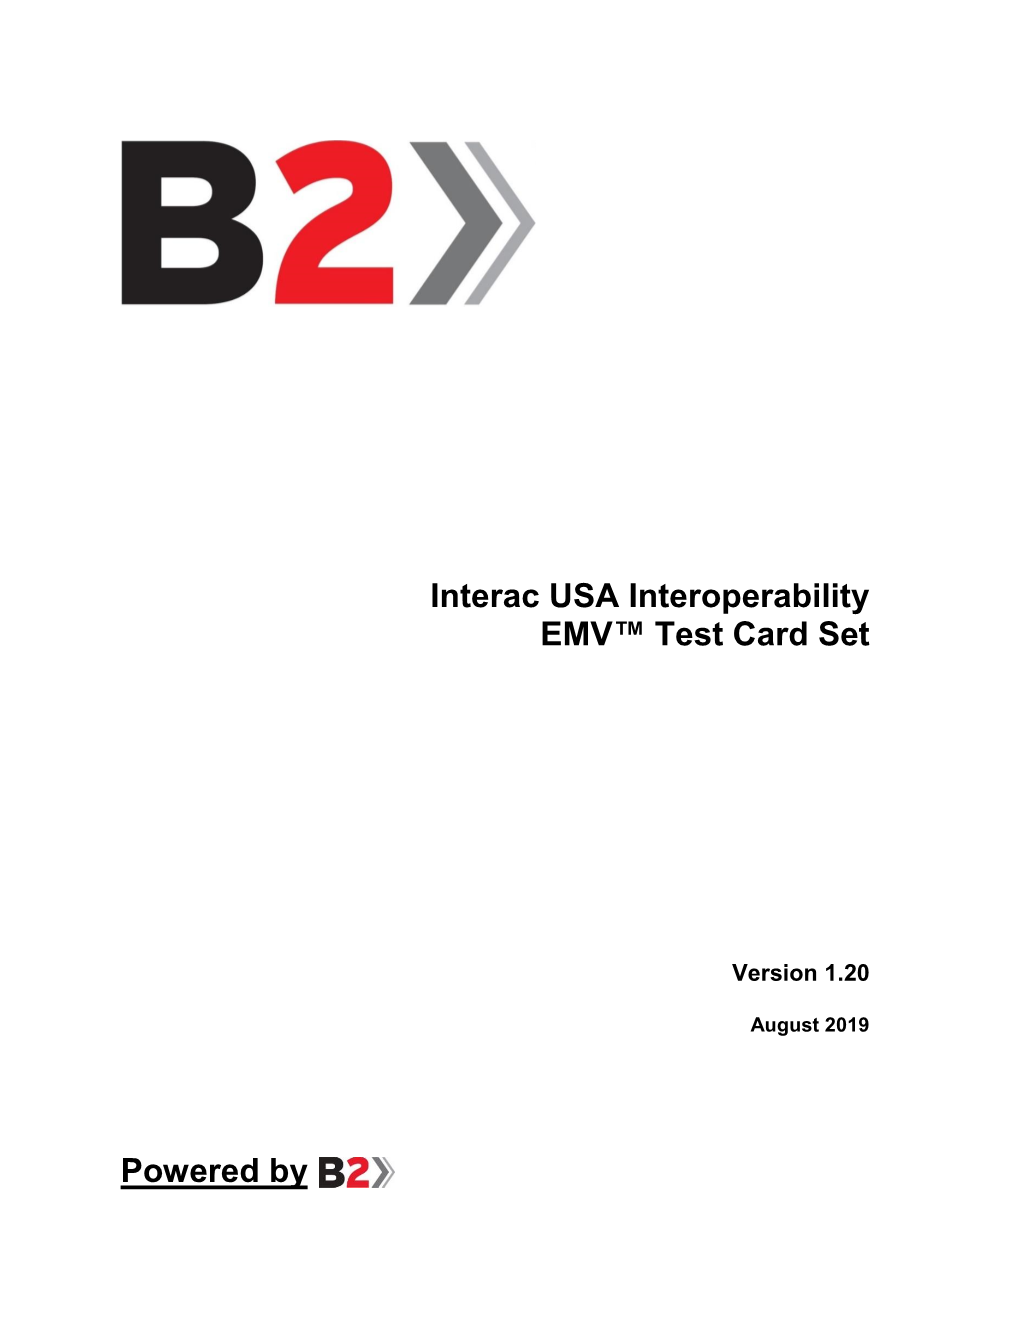 Interac USA Interoperability EMV™ Test Card Set Powered By